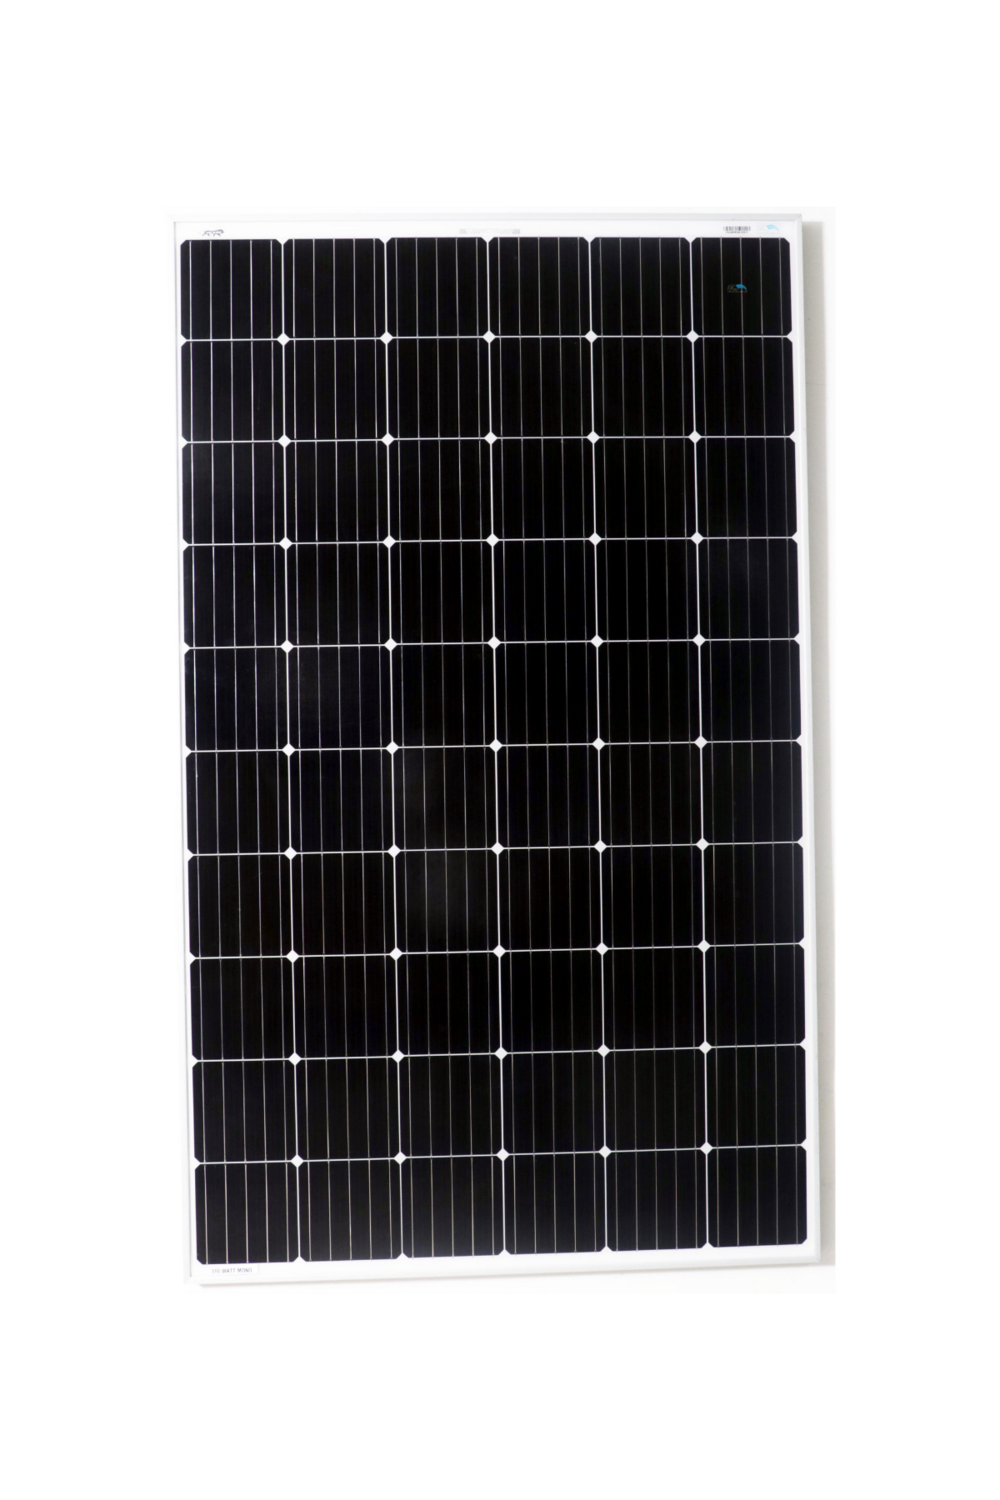 310 Watt Monocrystalline Solar Panel Buy Price in India